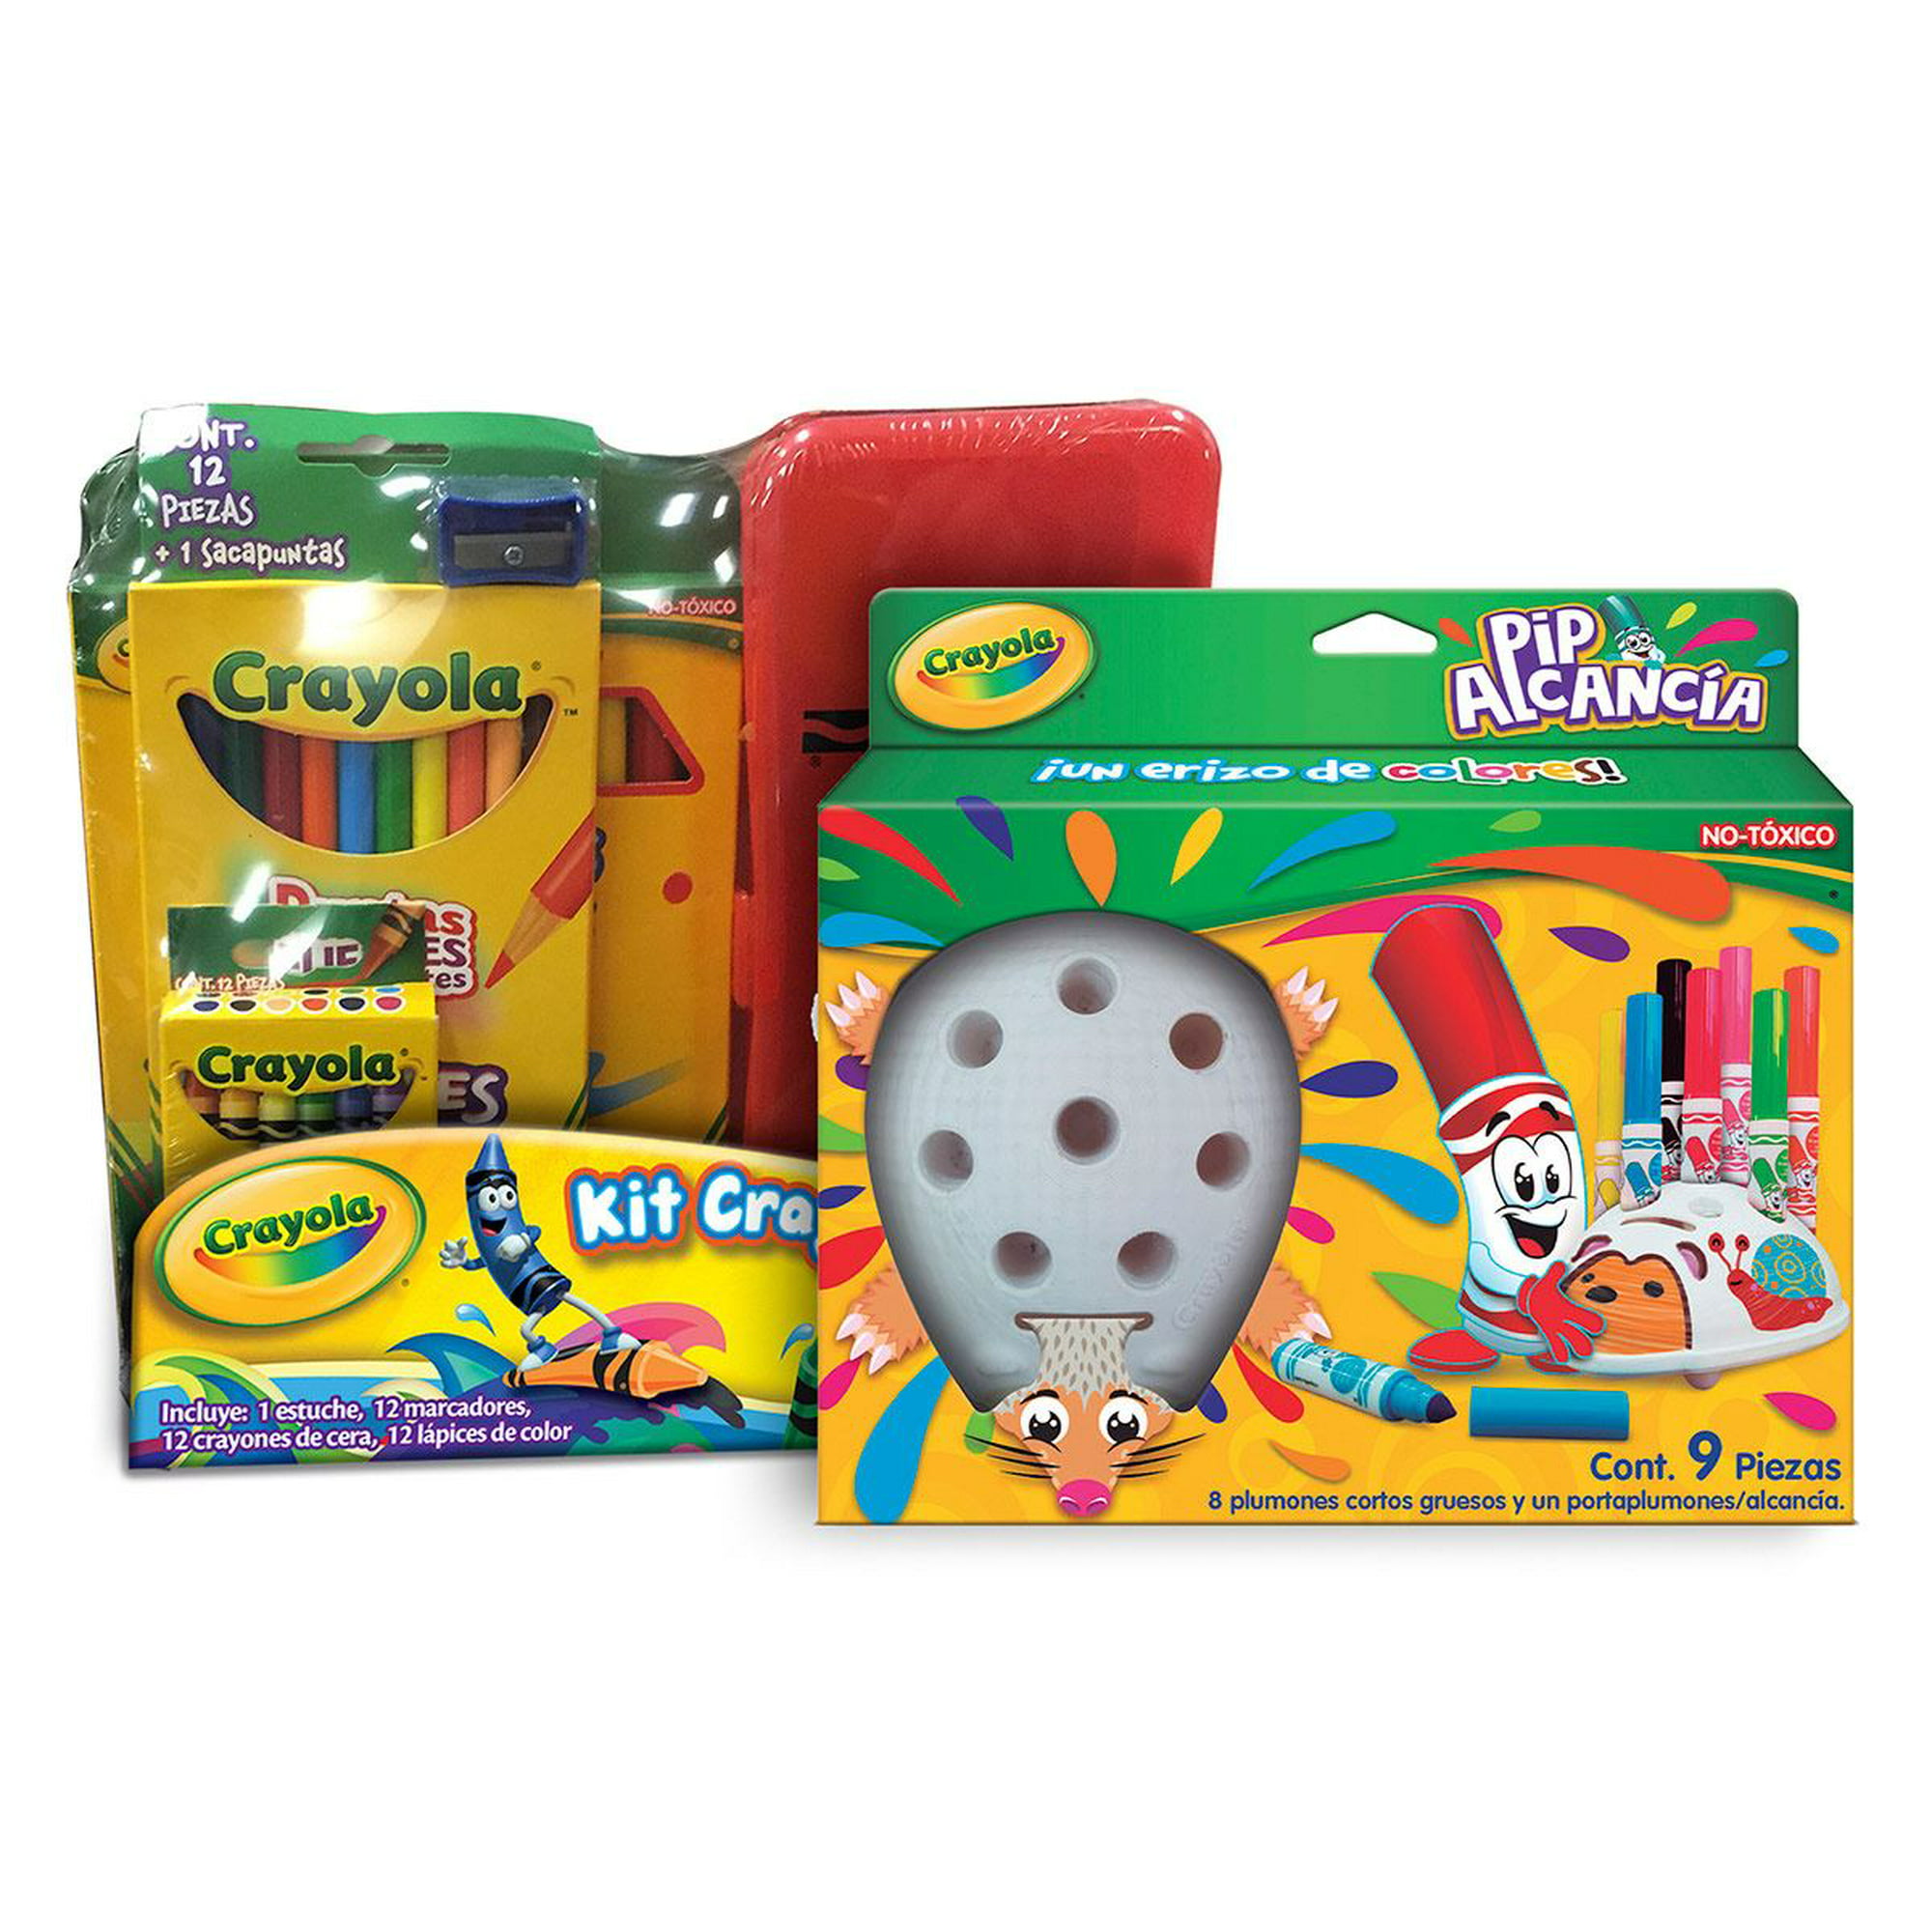 Kit Crayola Supertips 20 + Lápices De Colores 36 -oferta!